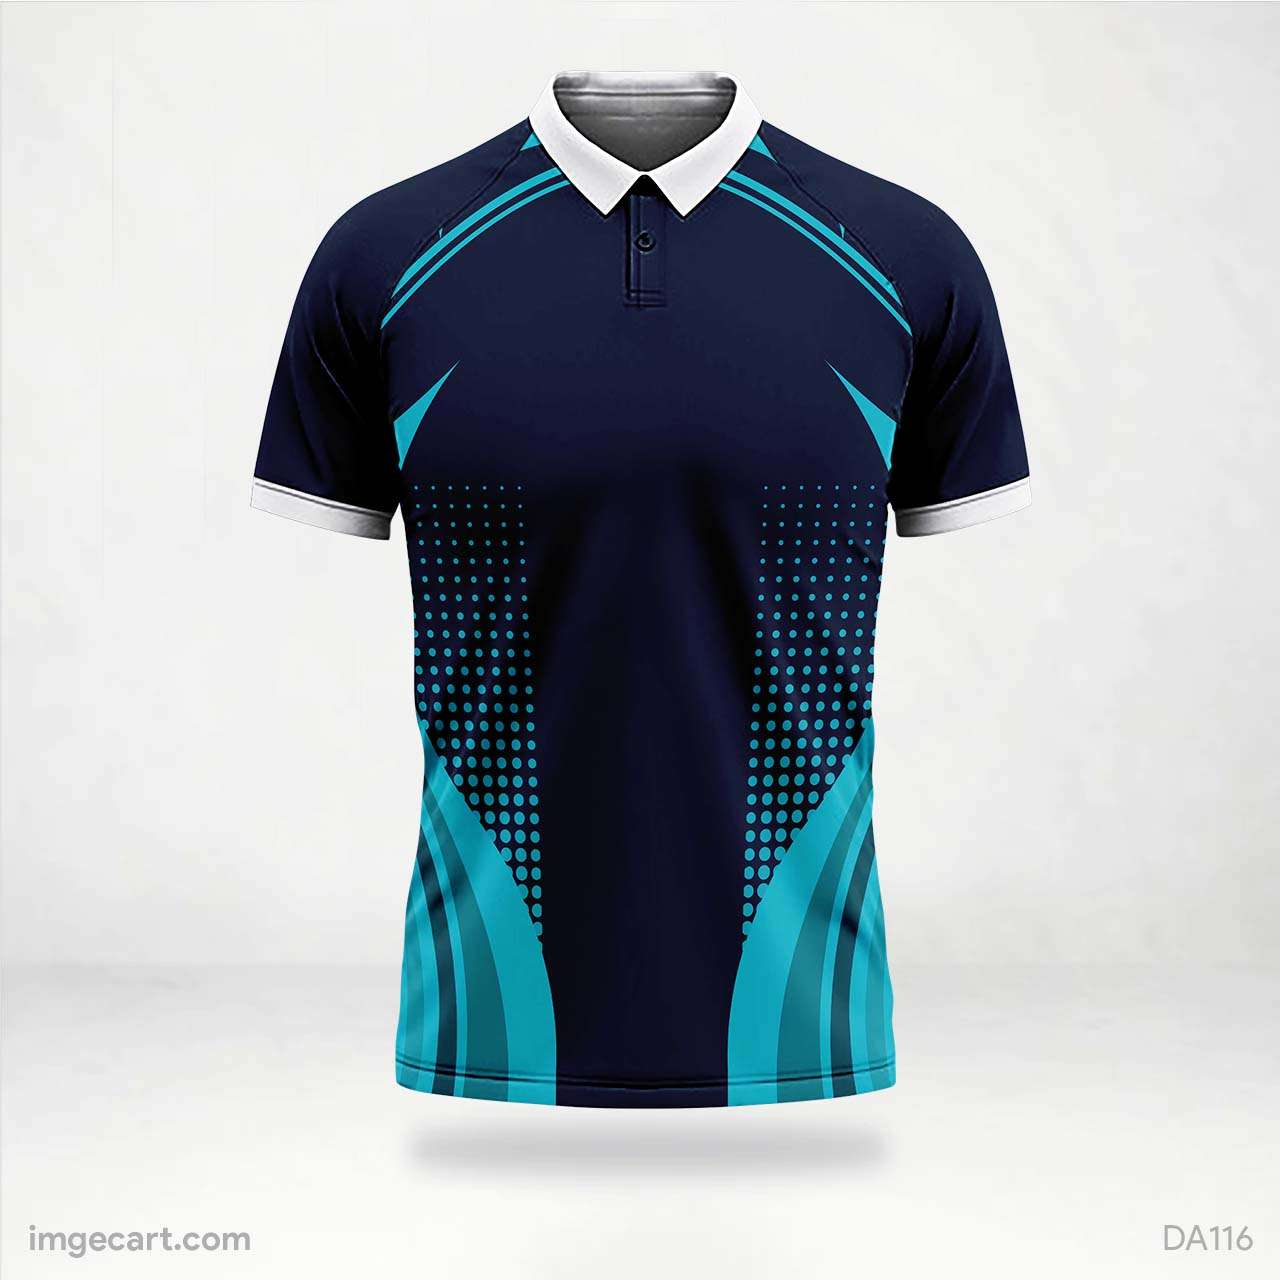 Cricket jersey navy blue with sky blue effect - imgecart